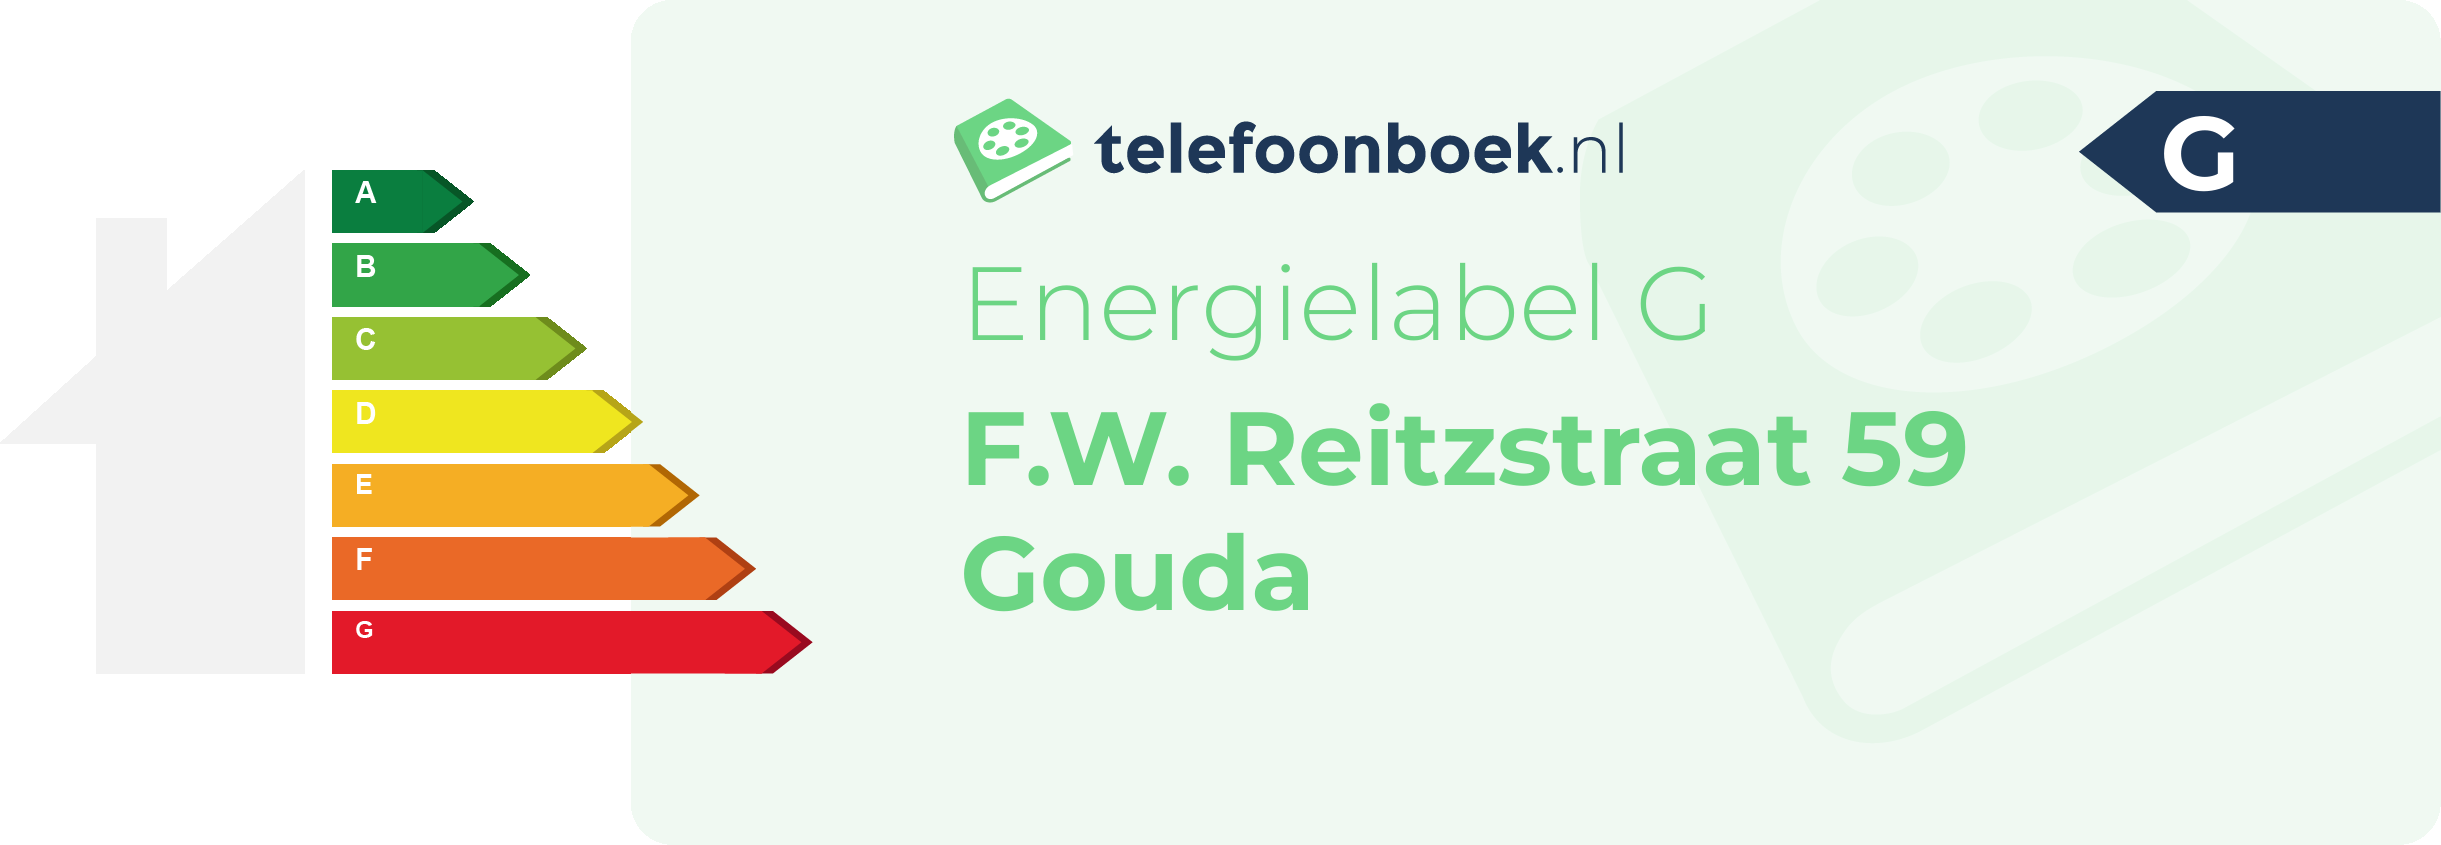 Energielabel F.W. Reitzstraat 59 Gouda